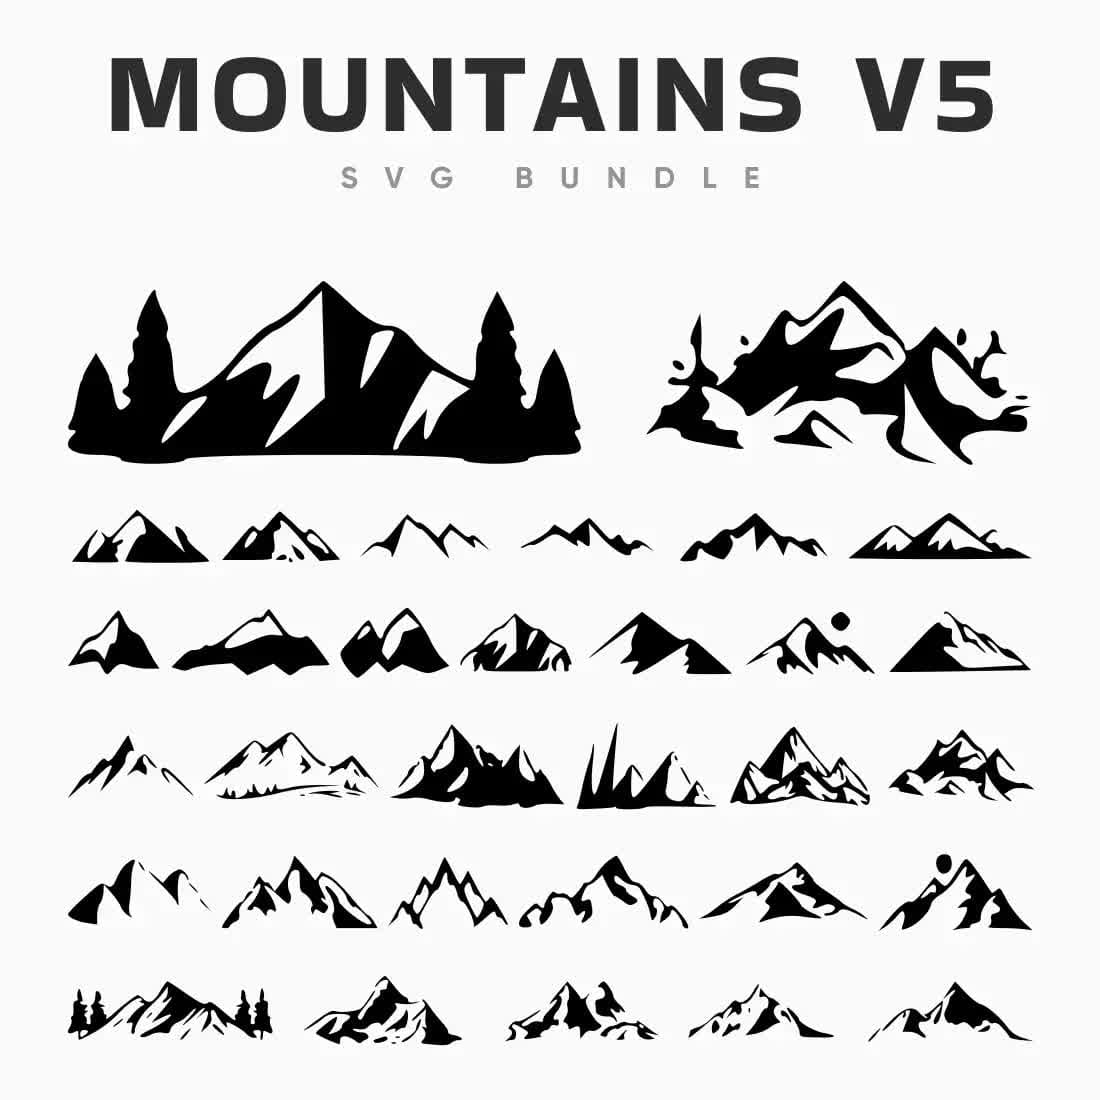 Mountains V5 SVG Bundle Preview 3.